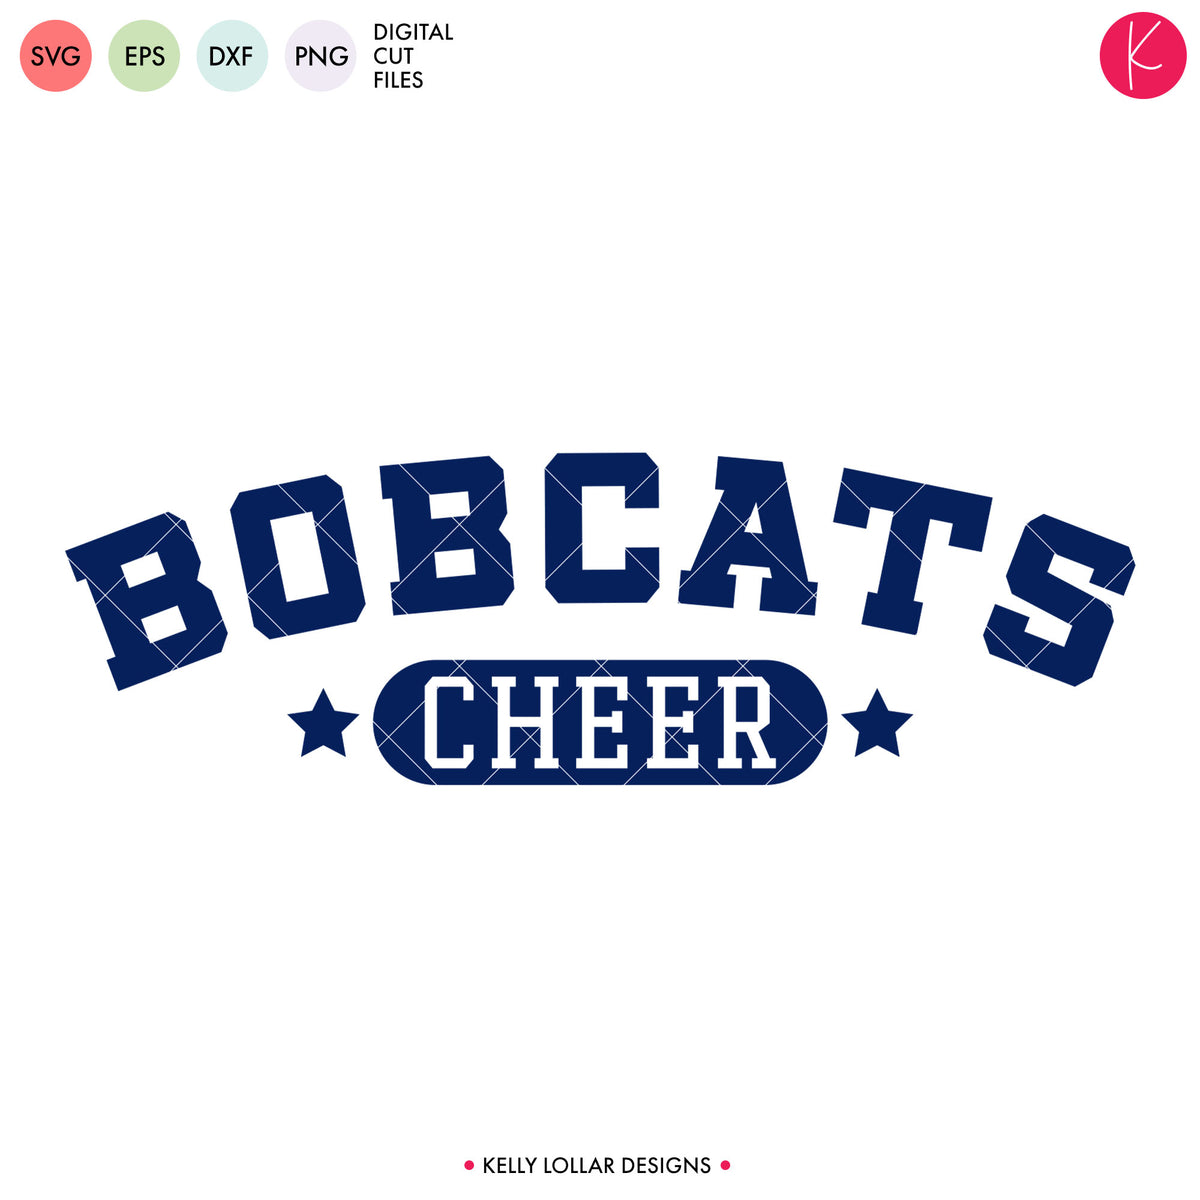 Bobcats Cheer Bundle | SVG DXF EPS PNG Cut Files